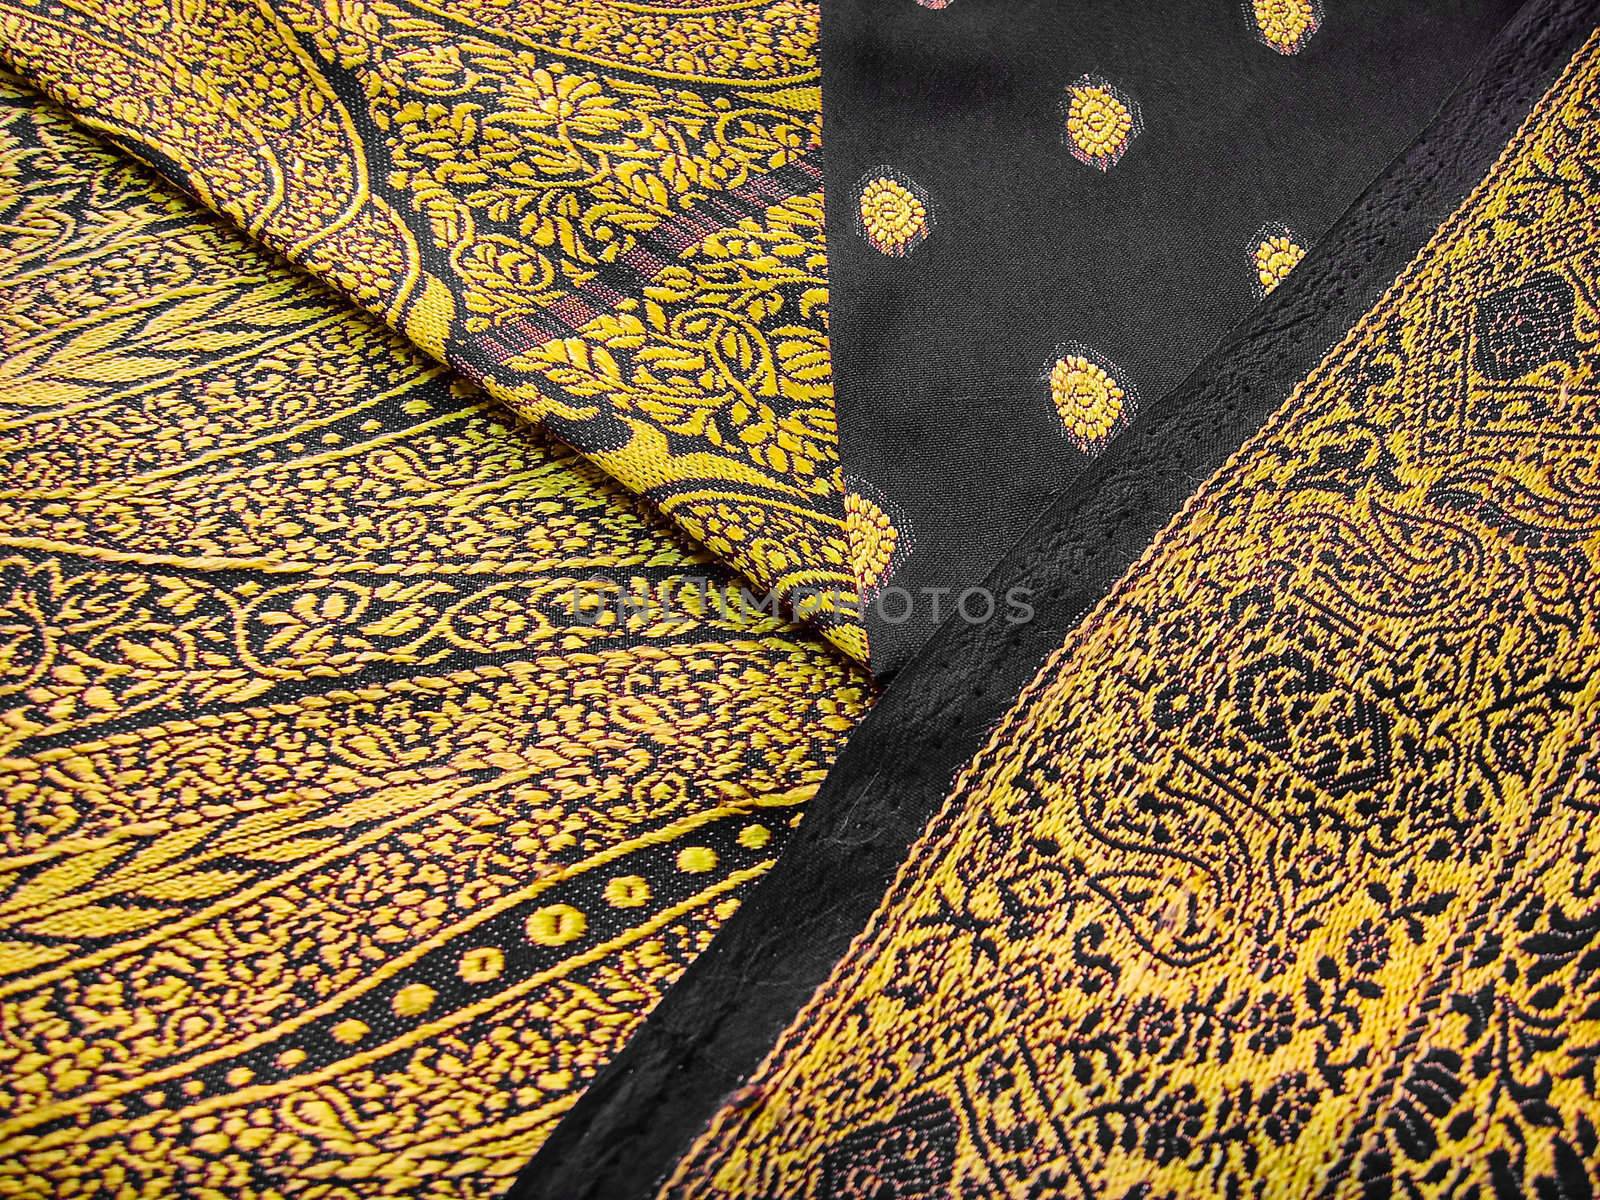 Black and yellow saree by alvingb